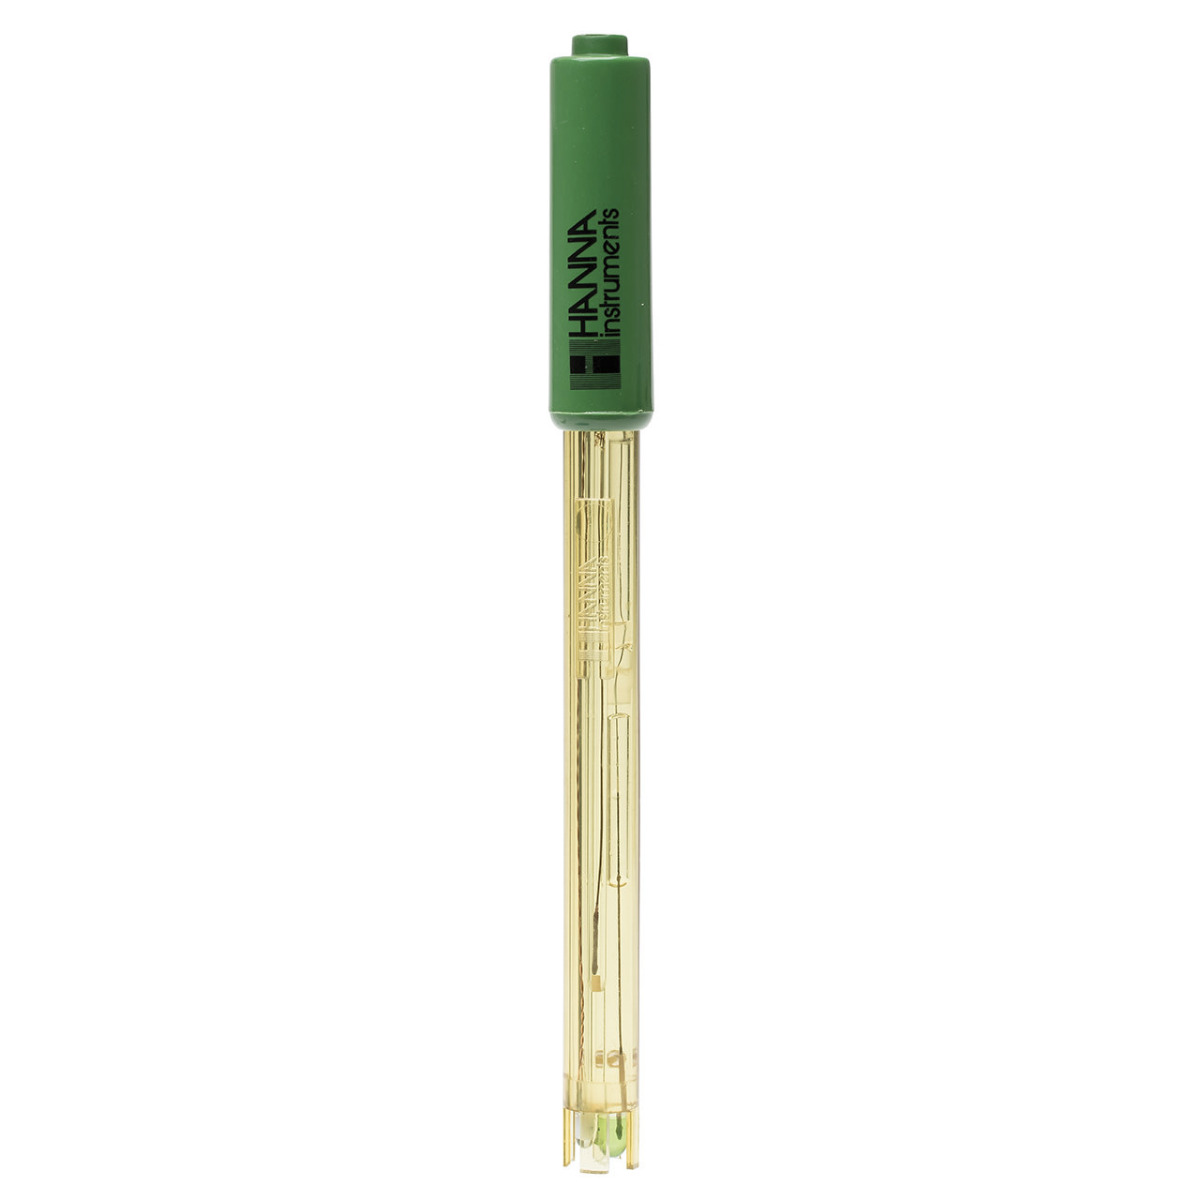 HI12301 - Digital pH/Temperature Electrode with Matching Pin